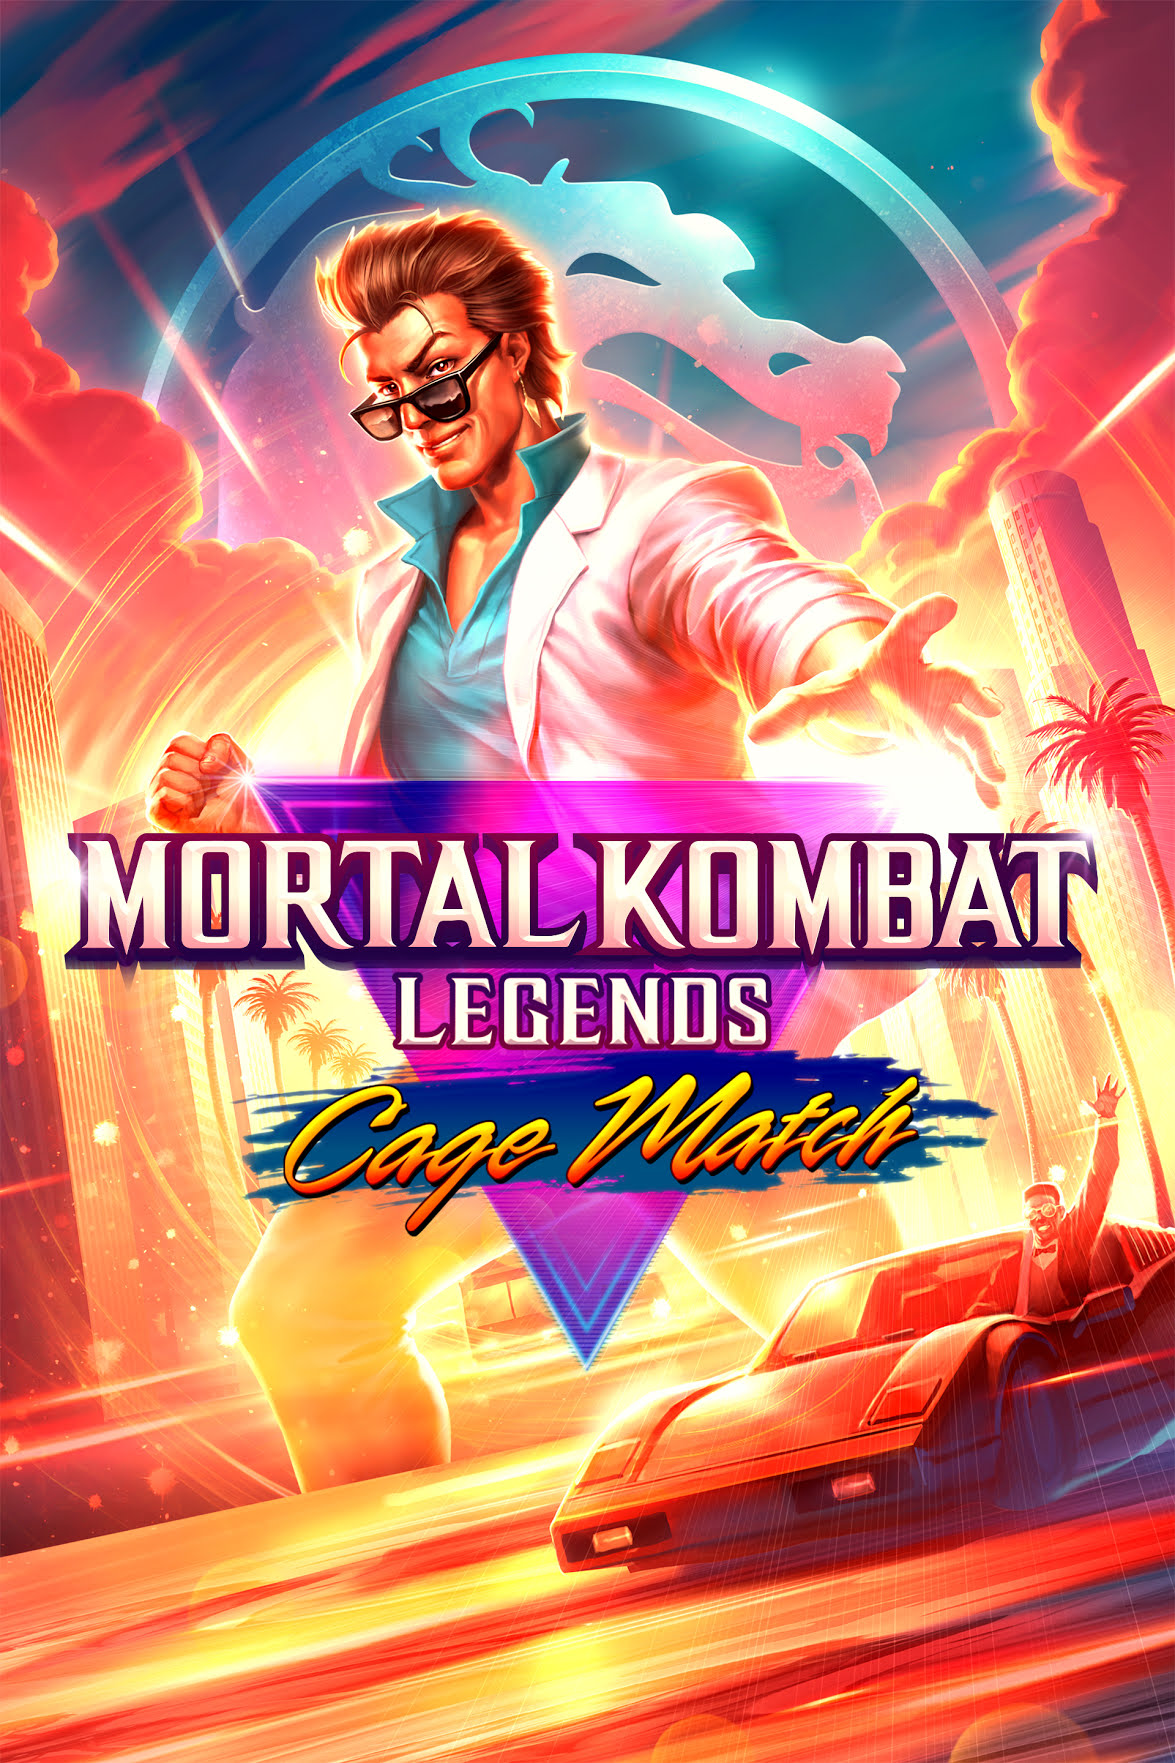 Mortal Kombat Legends Cage Match มอร์ทัลคอมแบตตำนานเคจแมทซ์ ซับไทย